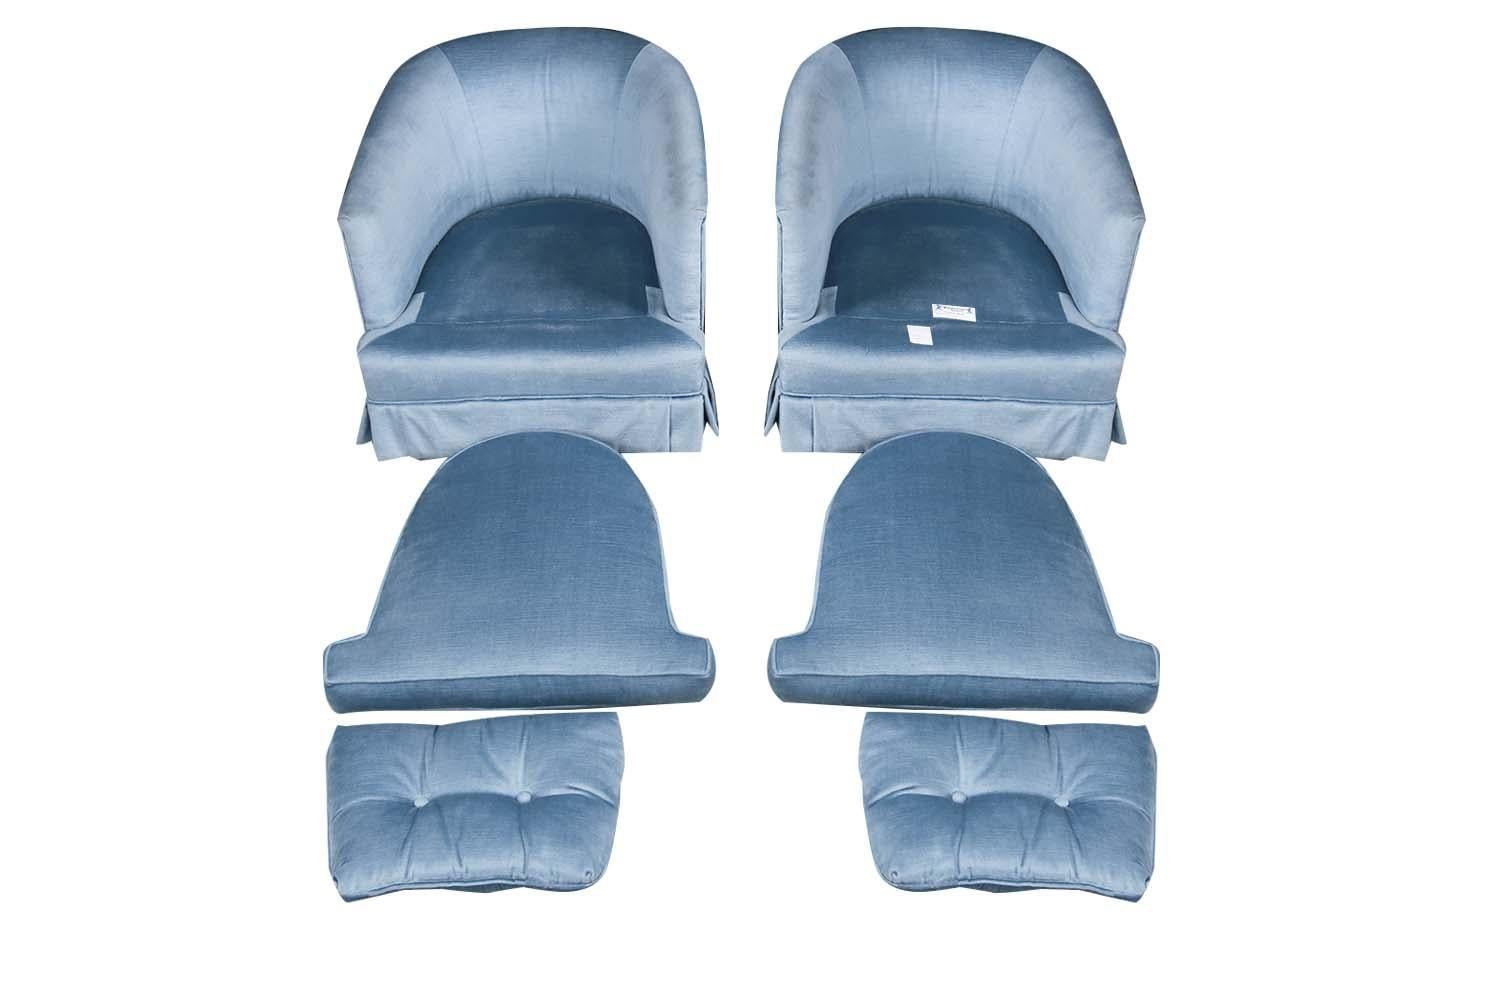 Upholstery Milo Baughman Style Midcentury Swivel Club Lounge Chairs Pair